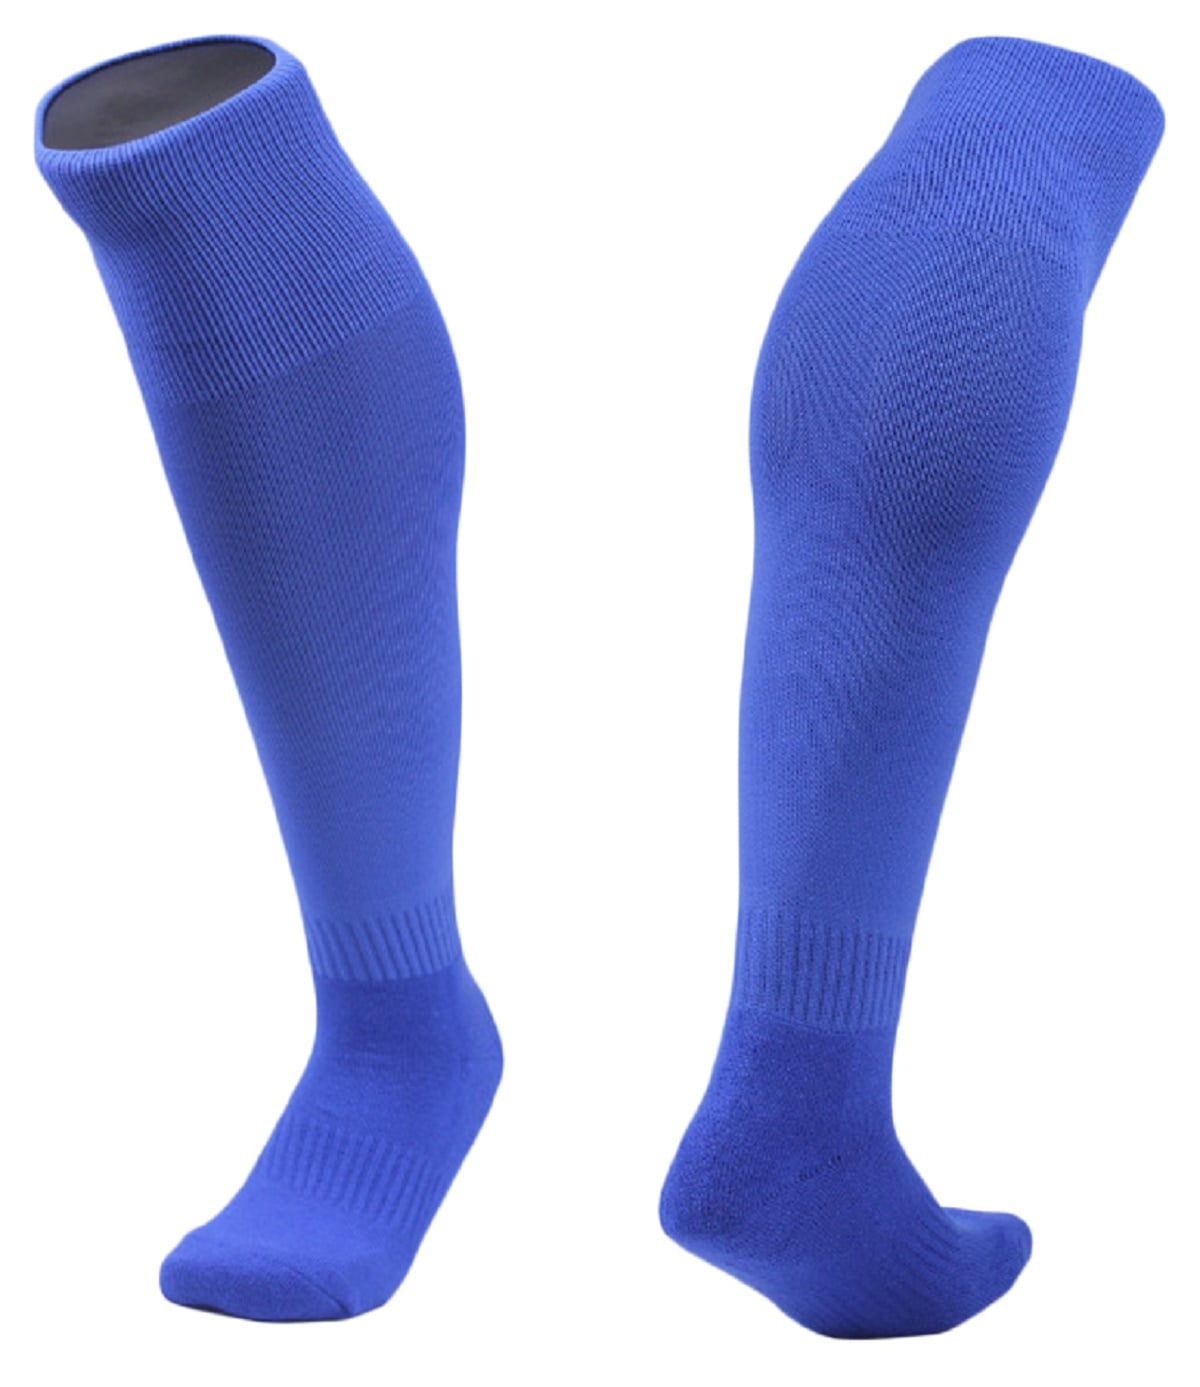 Meso Bs' 1 Pair Knee High Sports Socks for All Sports S Blue - Walmart.com